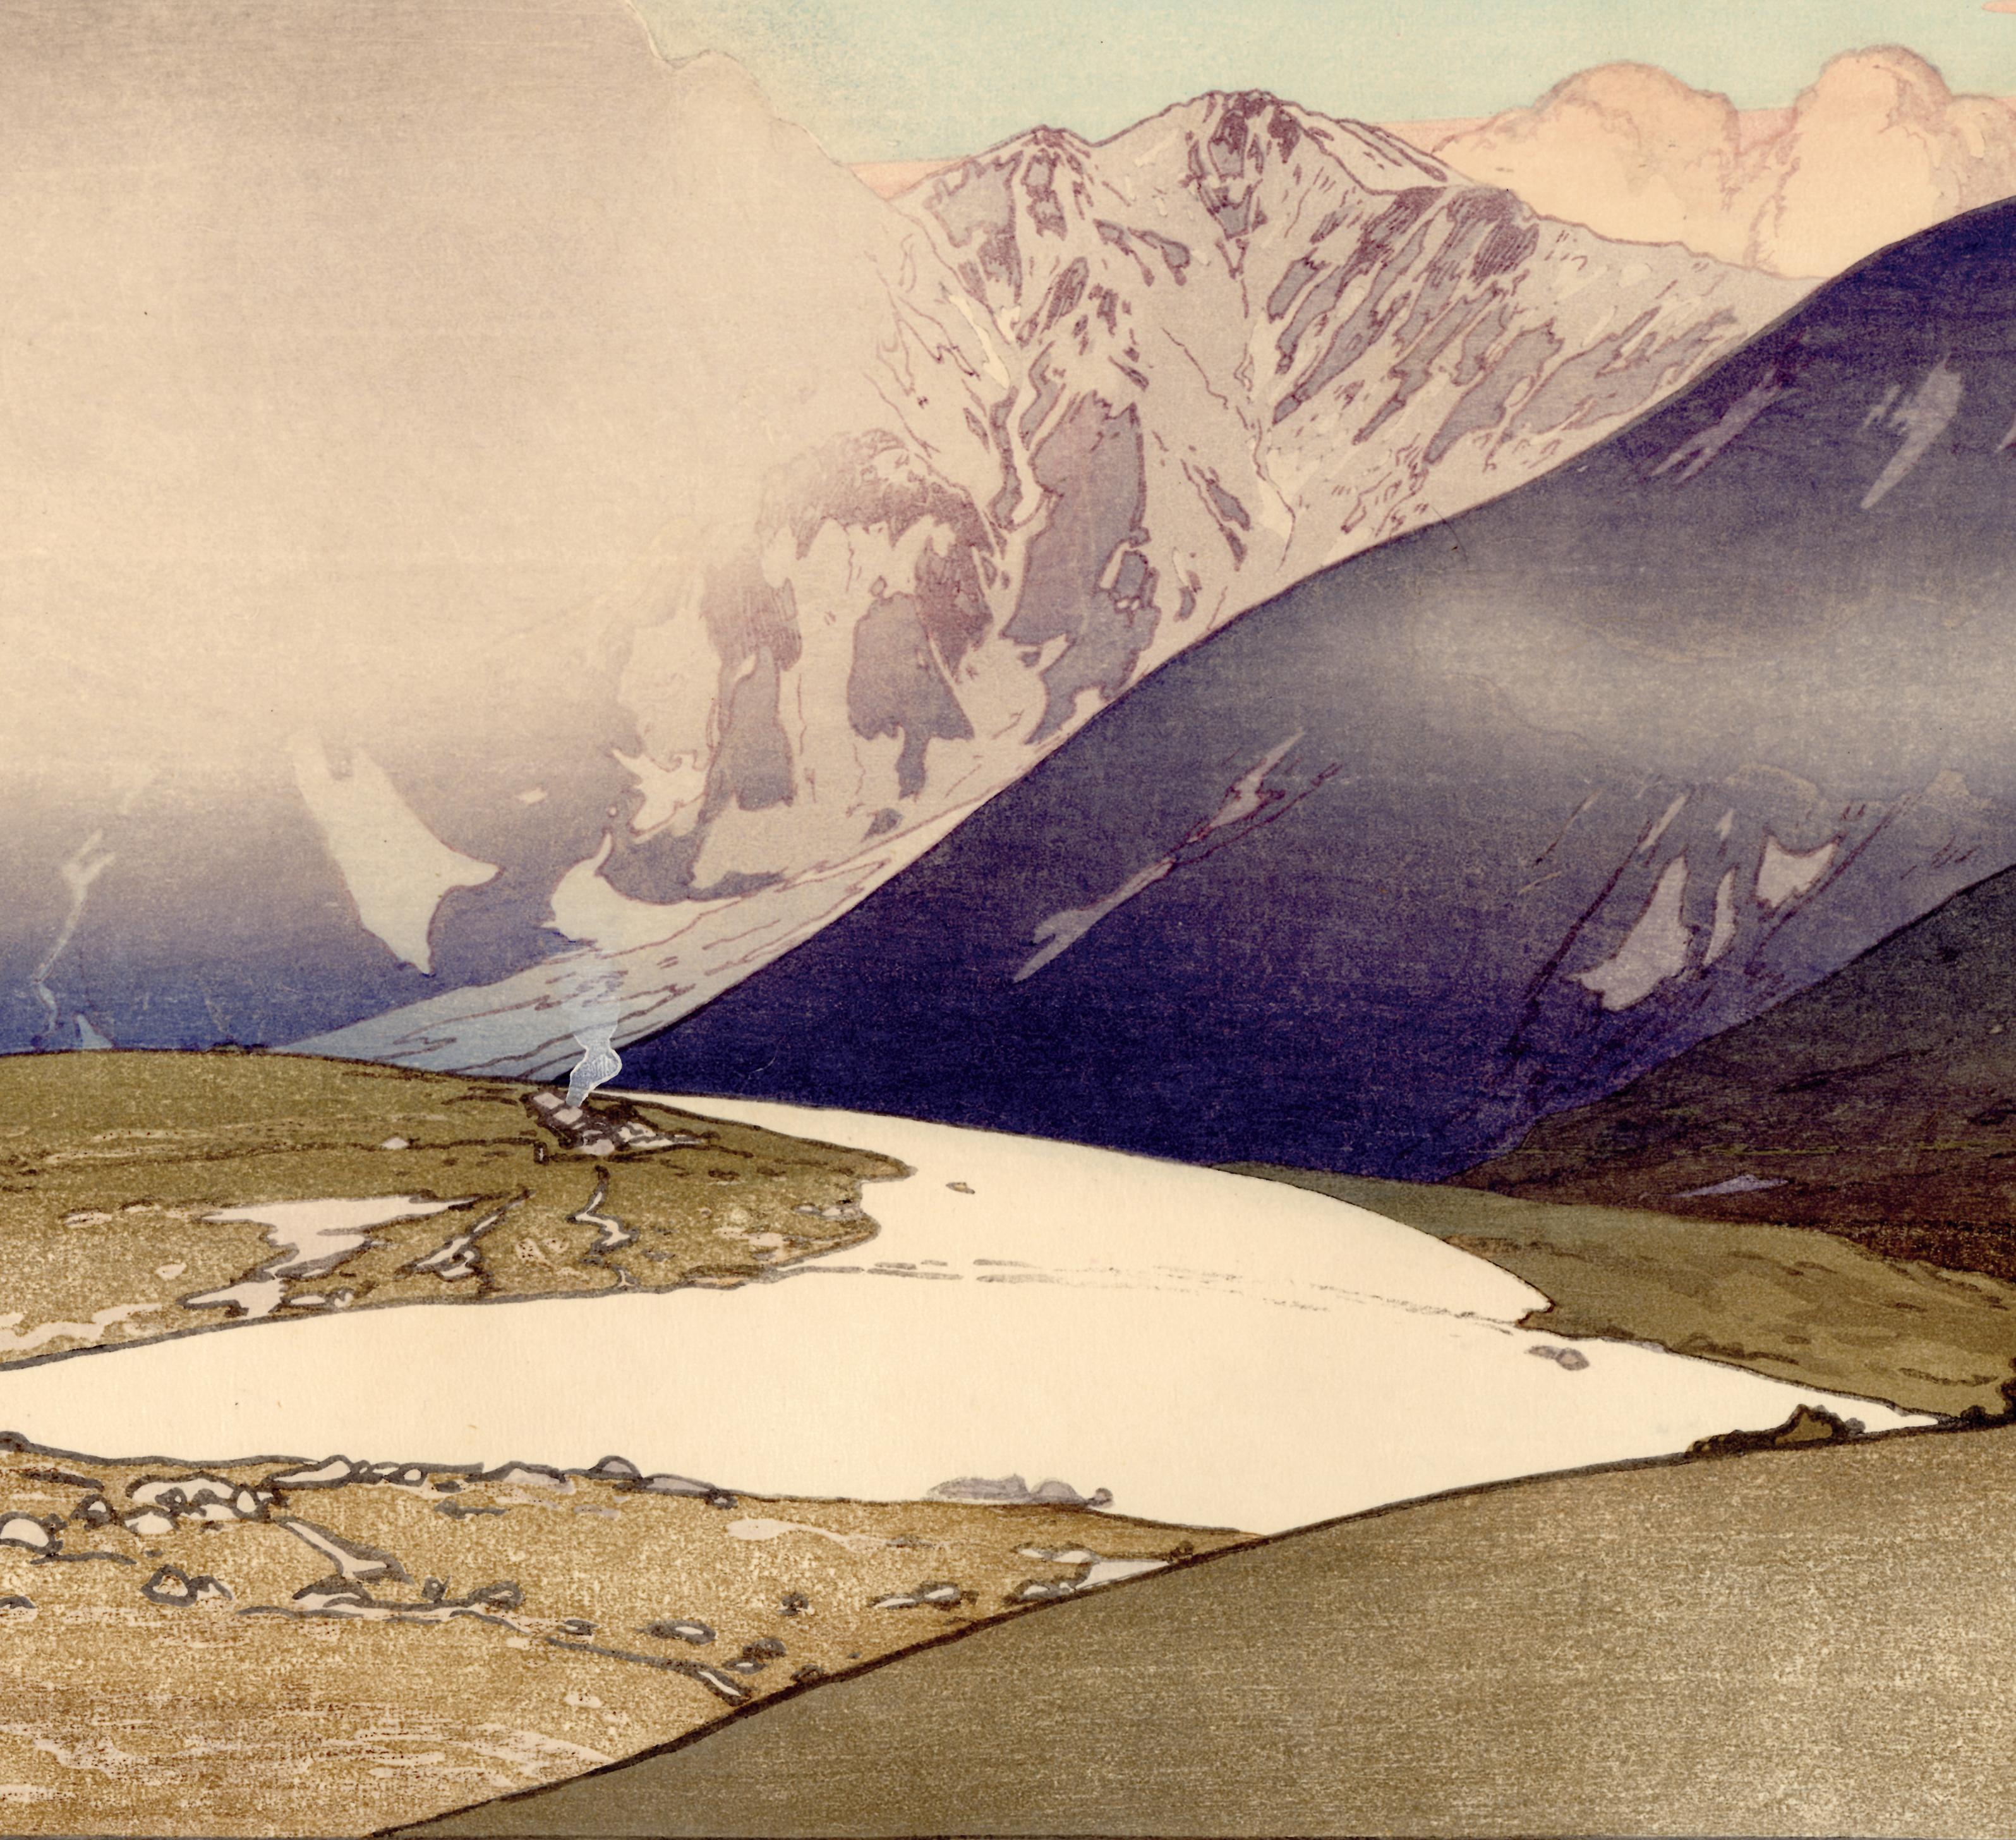 Tateyama Betsuzan from the Japan Alps Series - Showa Print by Hiroshi Yoshida